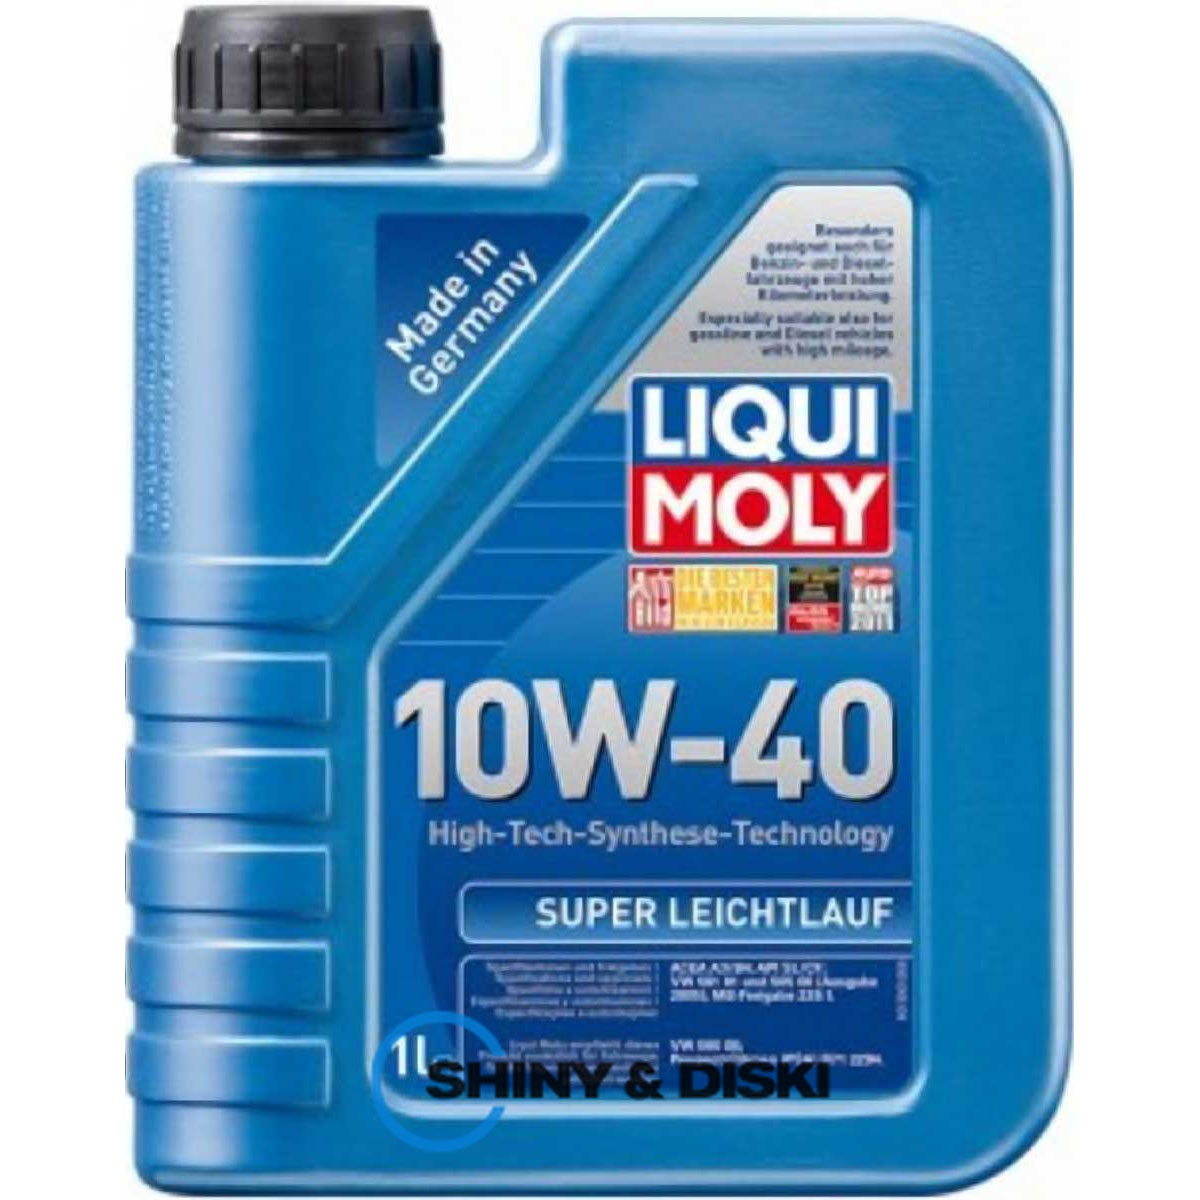 liqui moly super leichtlauf 10w-40 (1л)